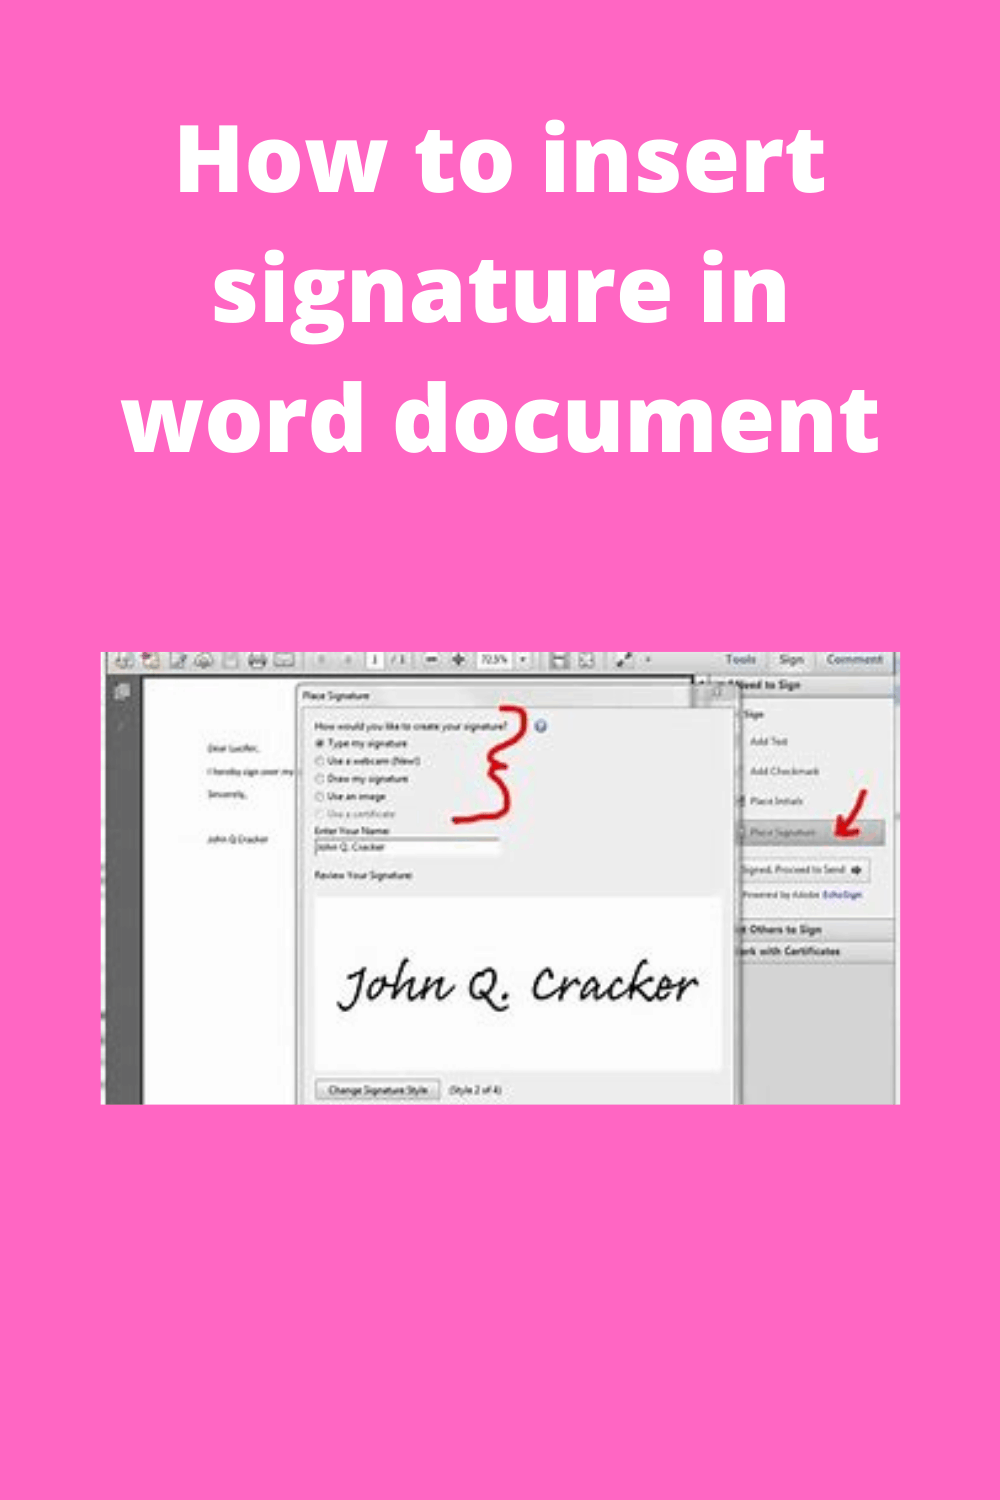 copy pdf signature to word